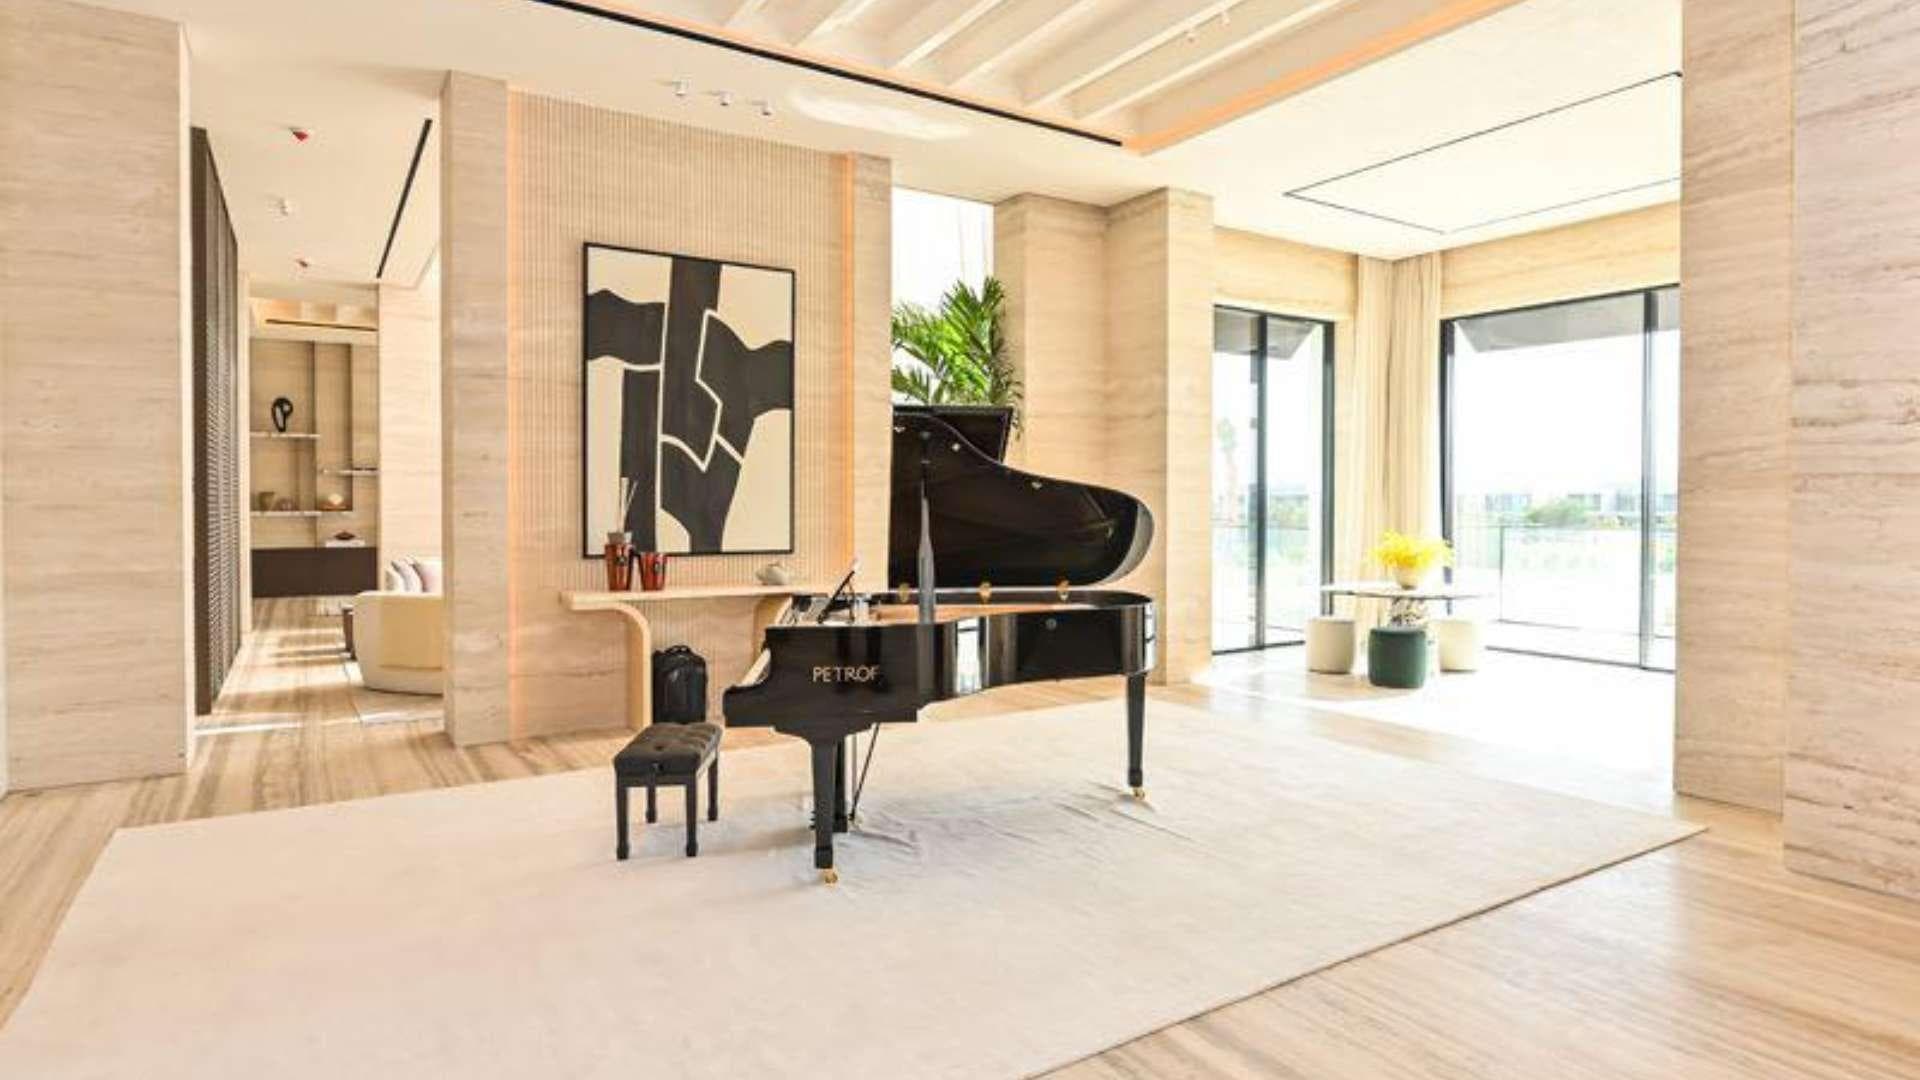 7 Bedroom Villa For Sale Dubai Hills Lp20693 2cafe7f7d32cbe00.jpg